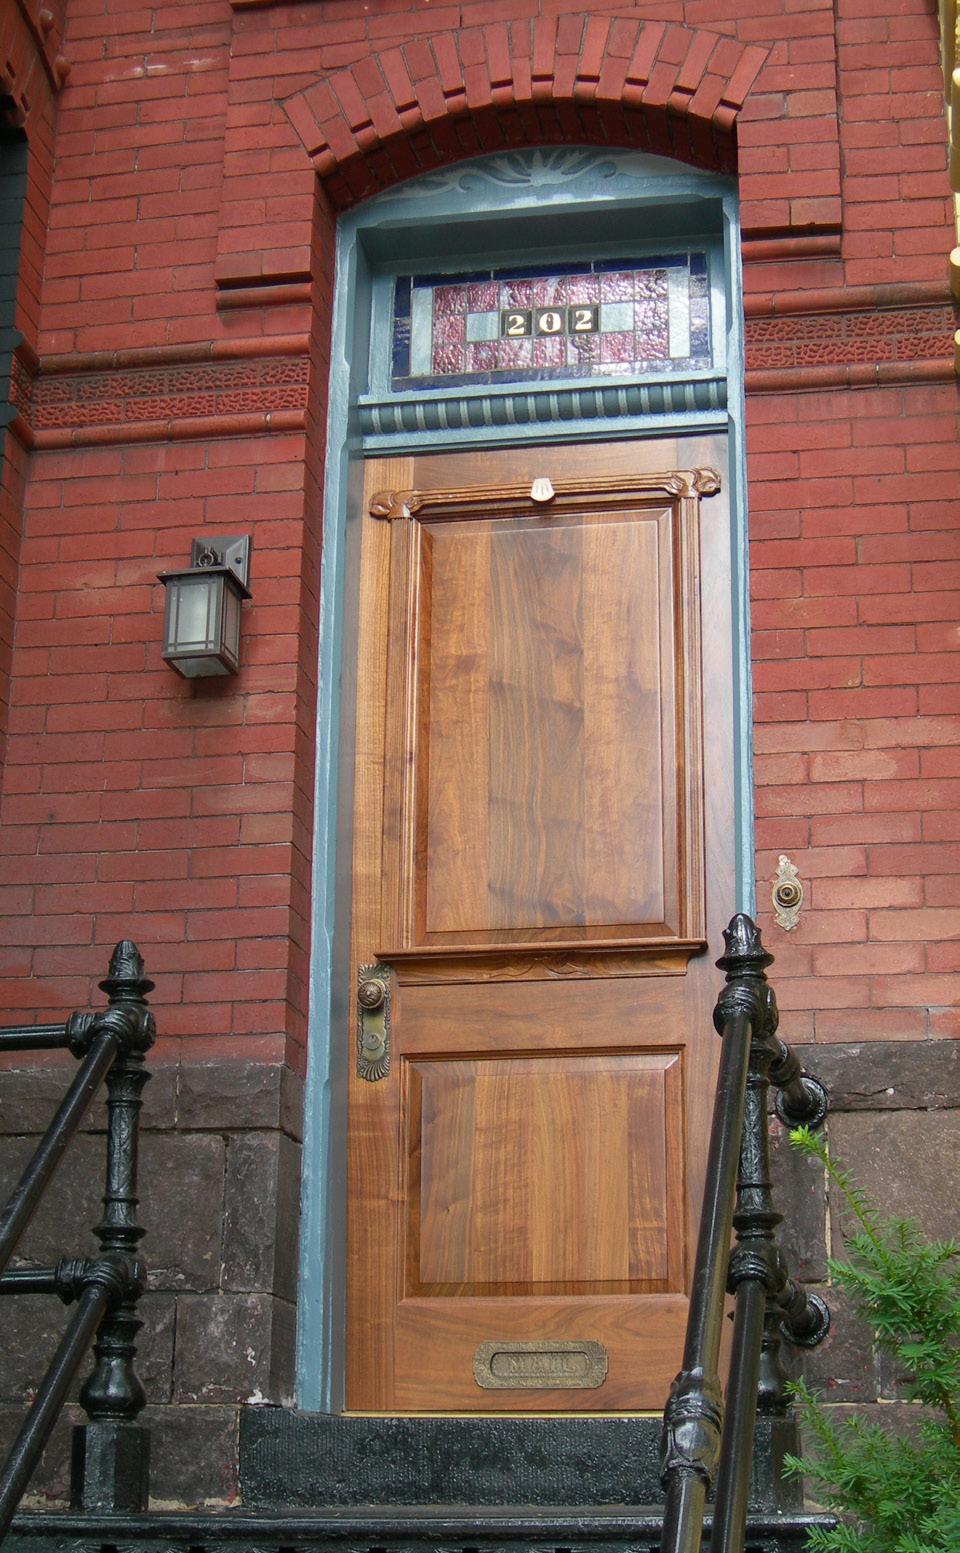 2.4 Precise replication of original door appearance is typically not required if the original door is gone.